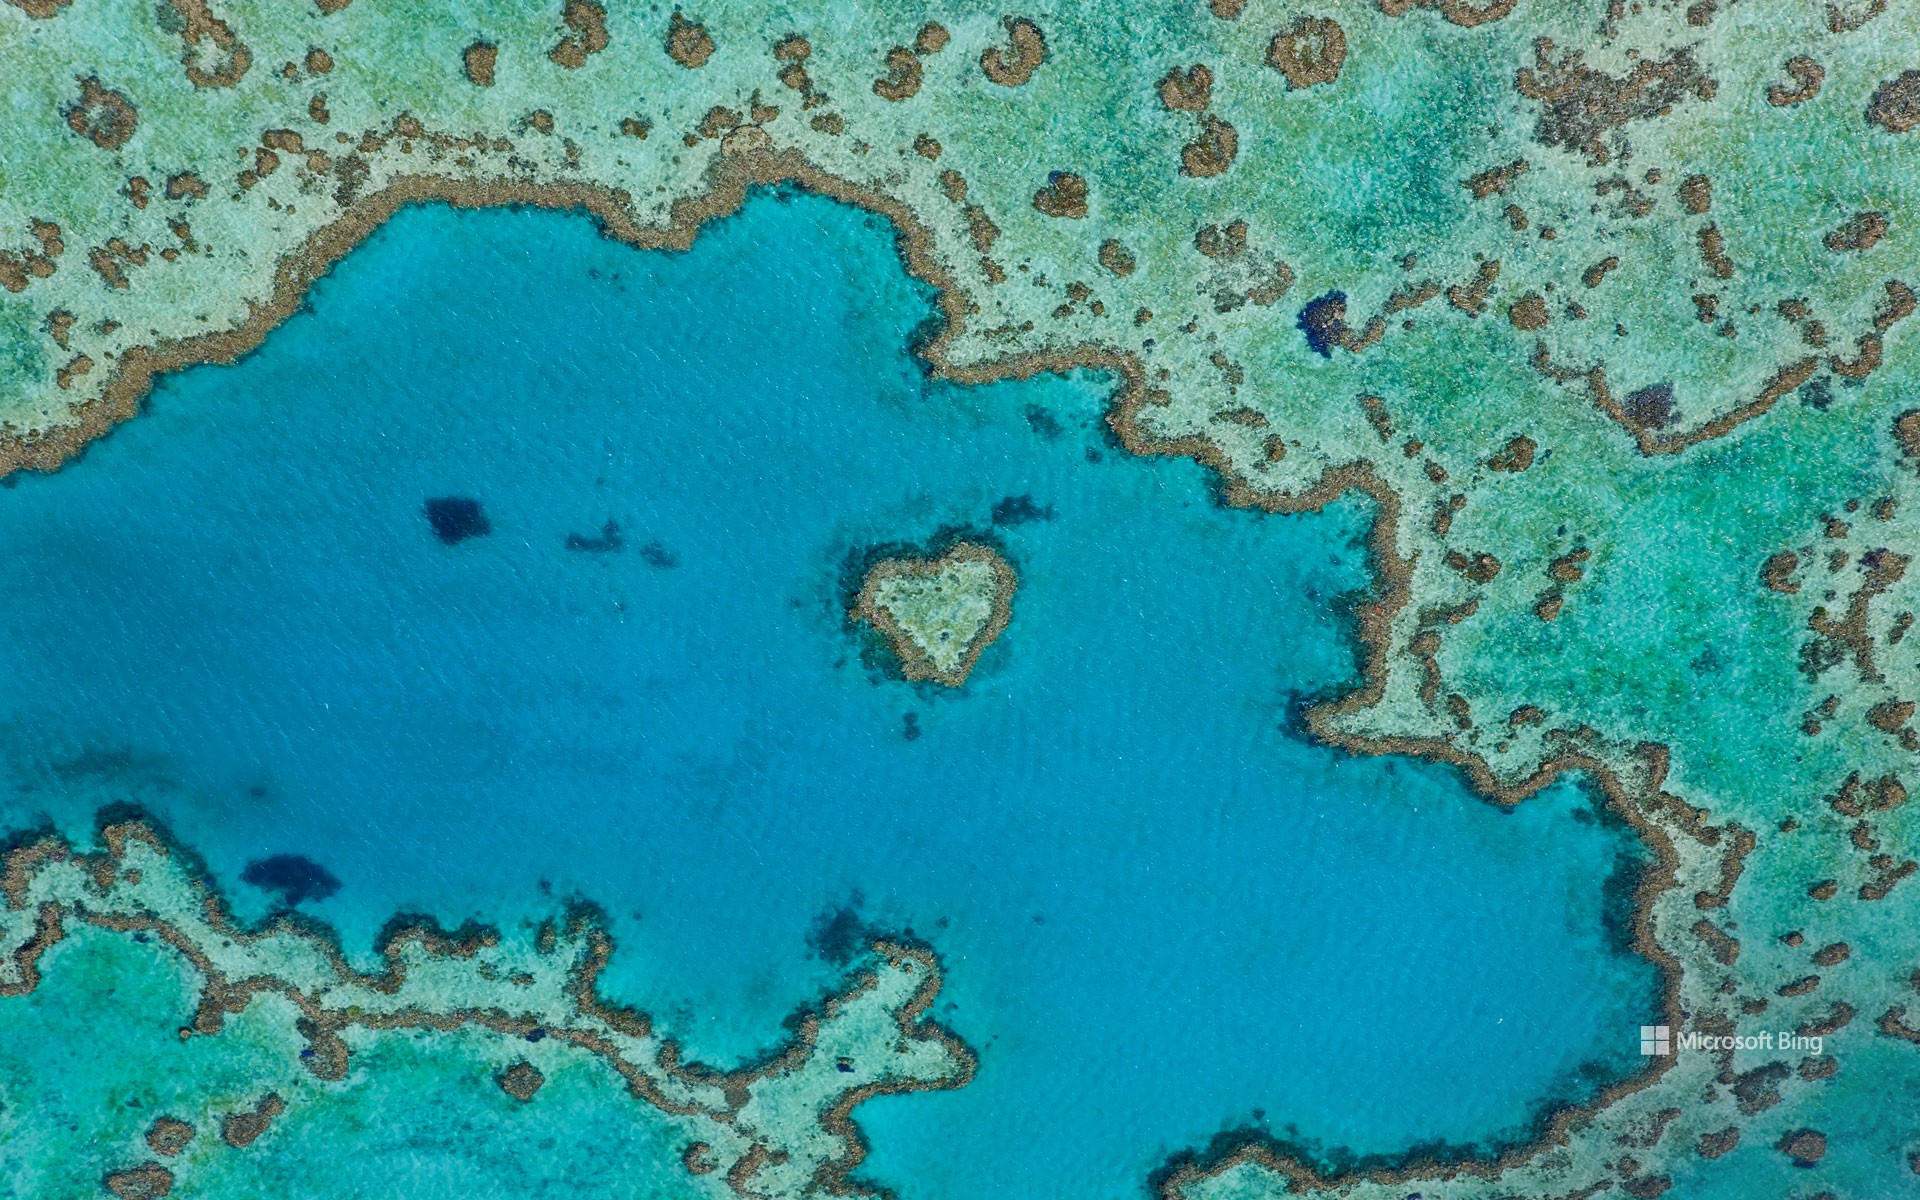 Heart Reef, part of the Great Barrier Reef off Queensland, Australia